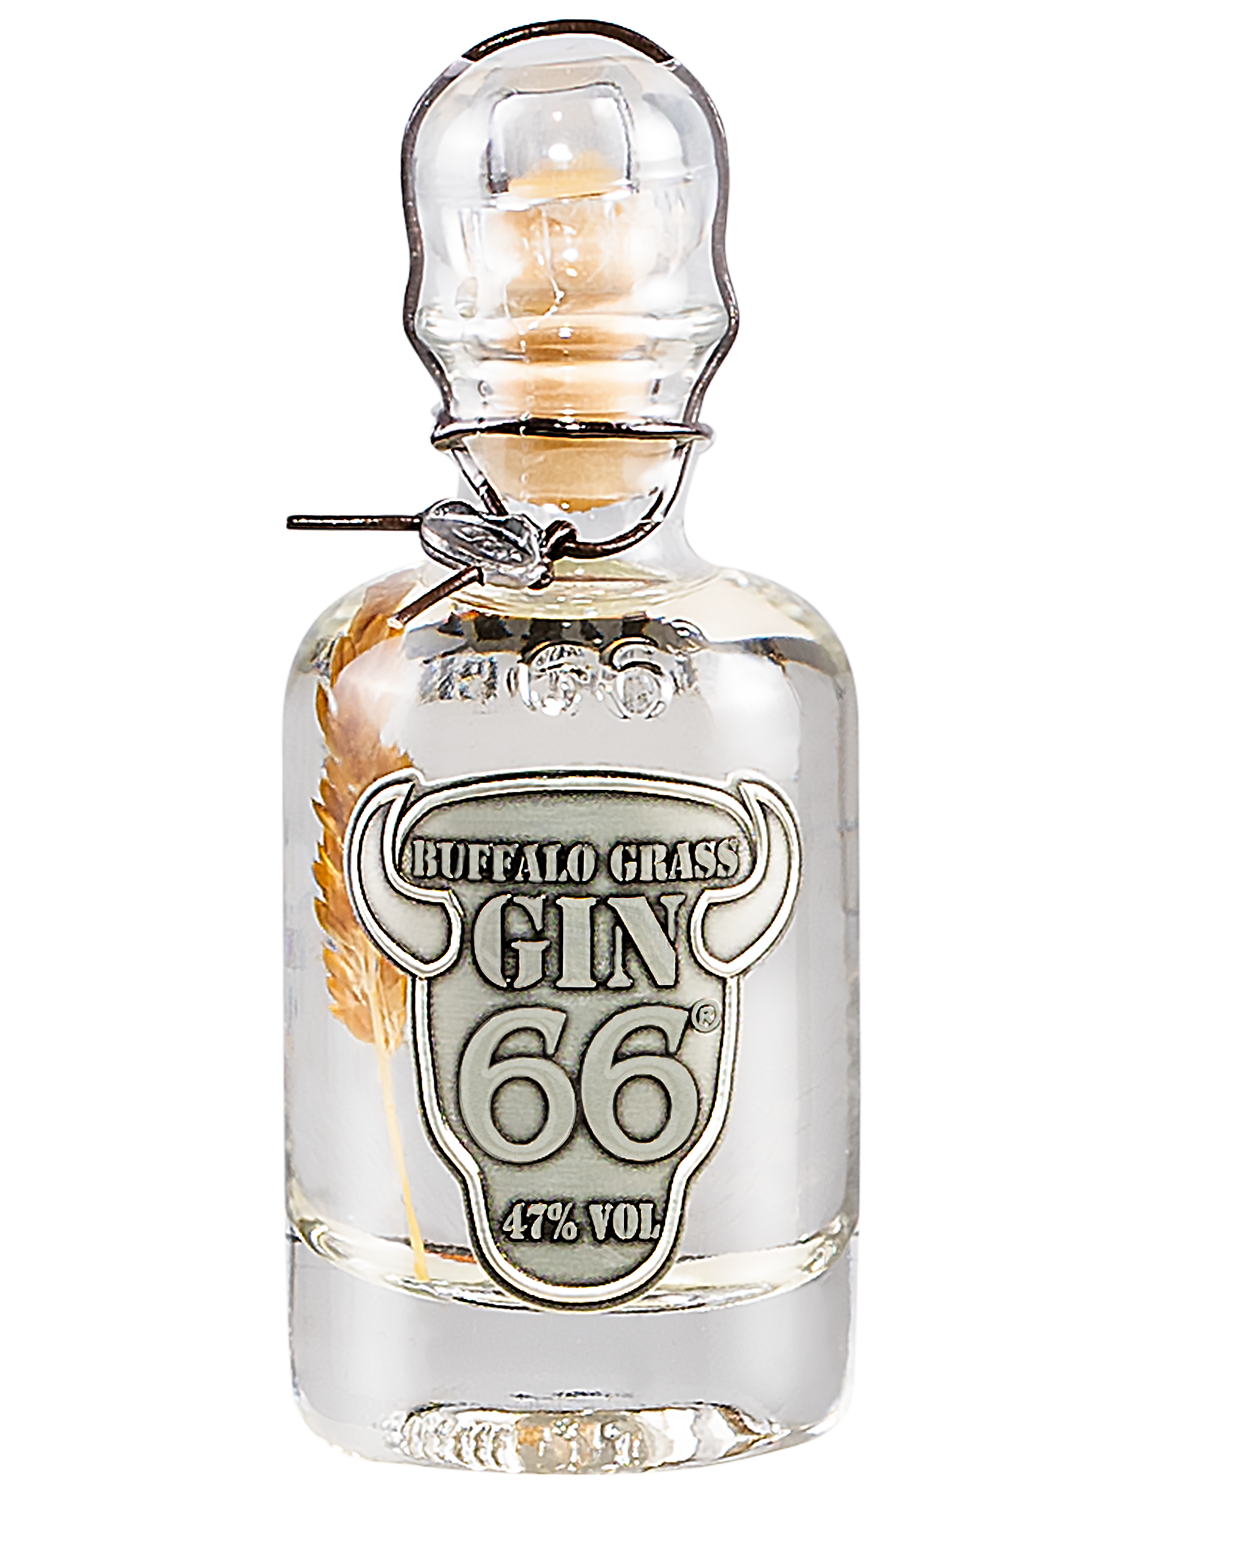 Mini butelki Buffalo Grass Gin 66® - 6x40ml / 47% vol.